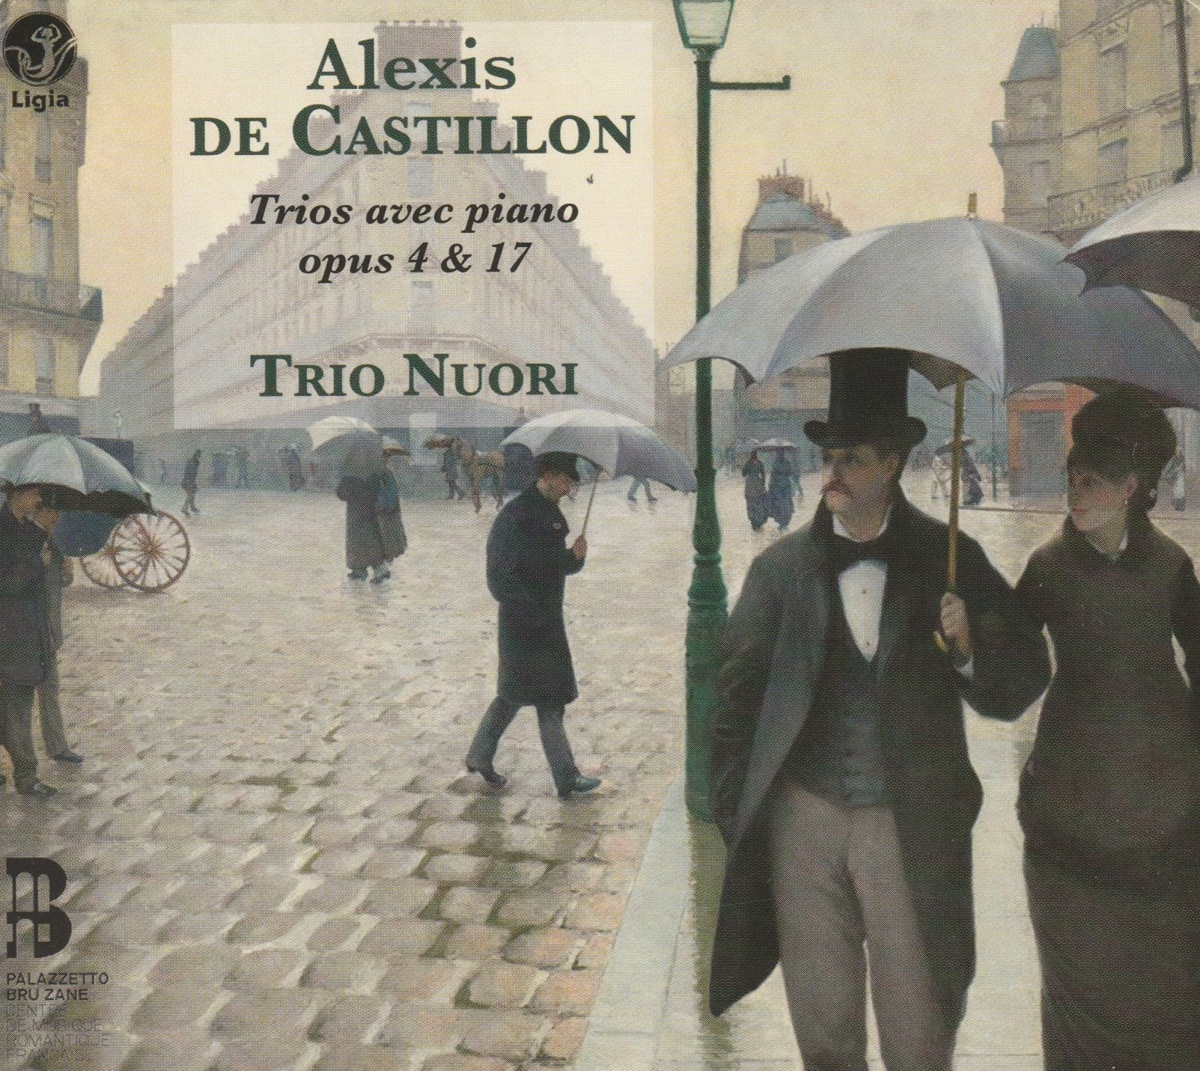 Trio NUORI - Alexis de Castillon